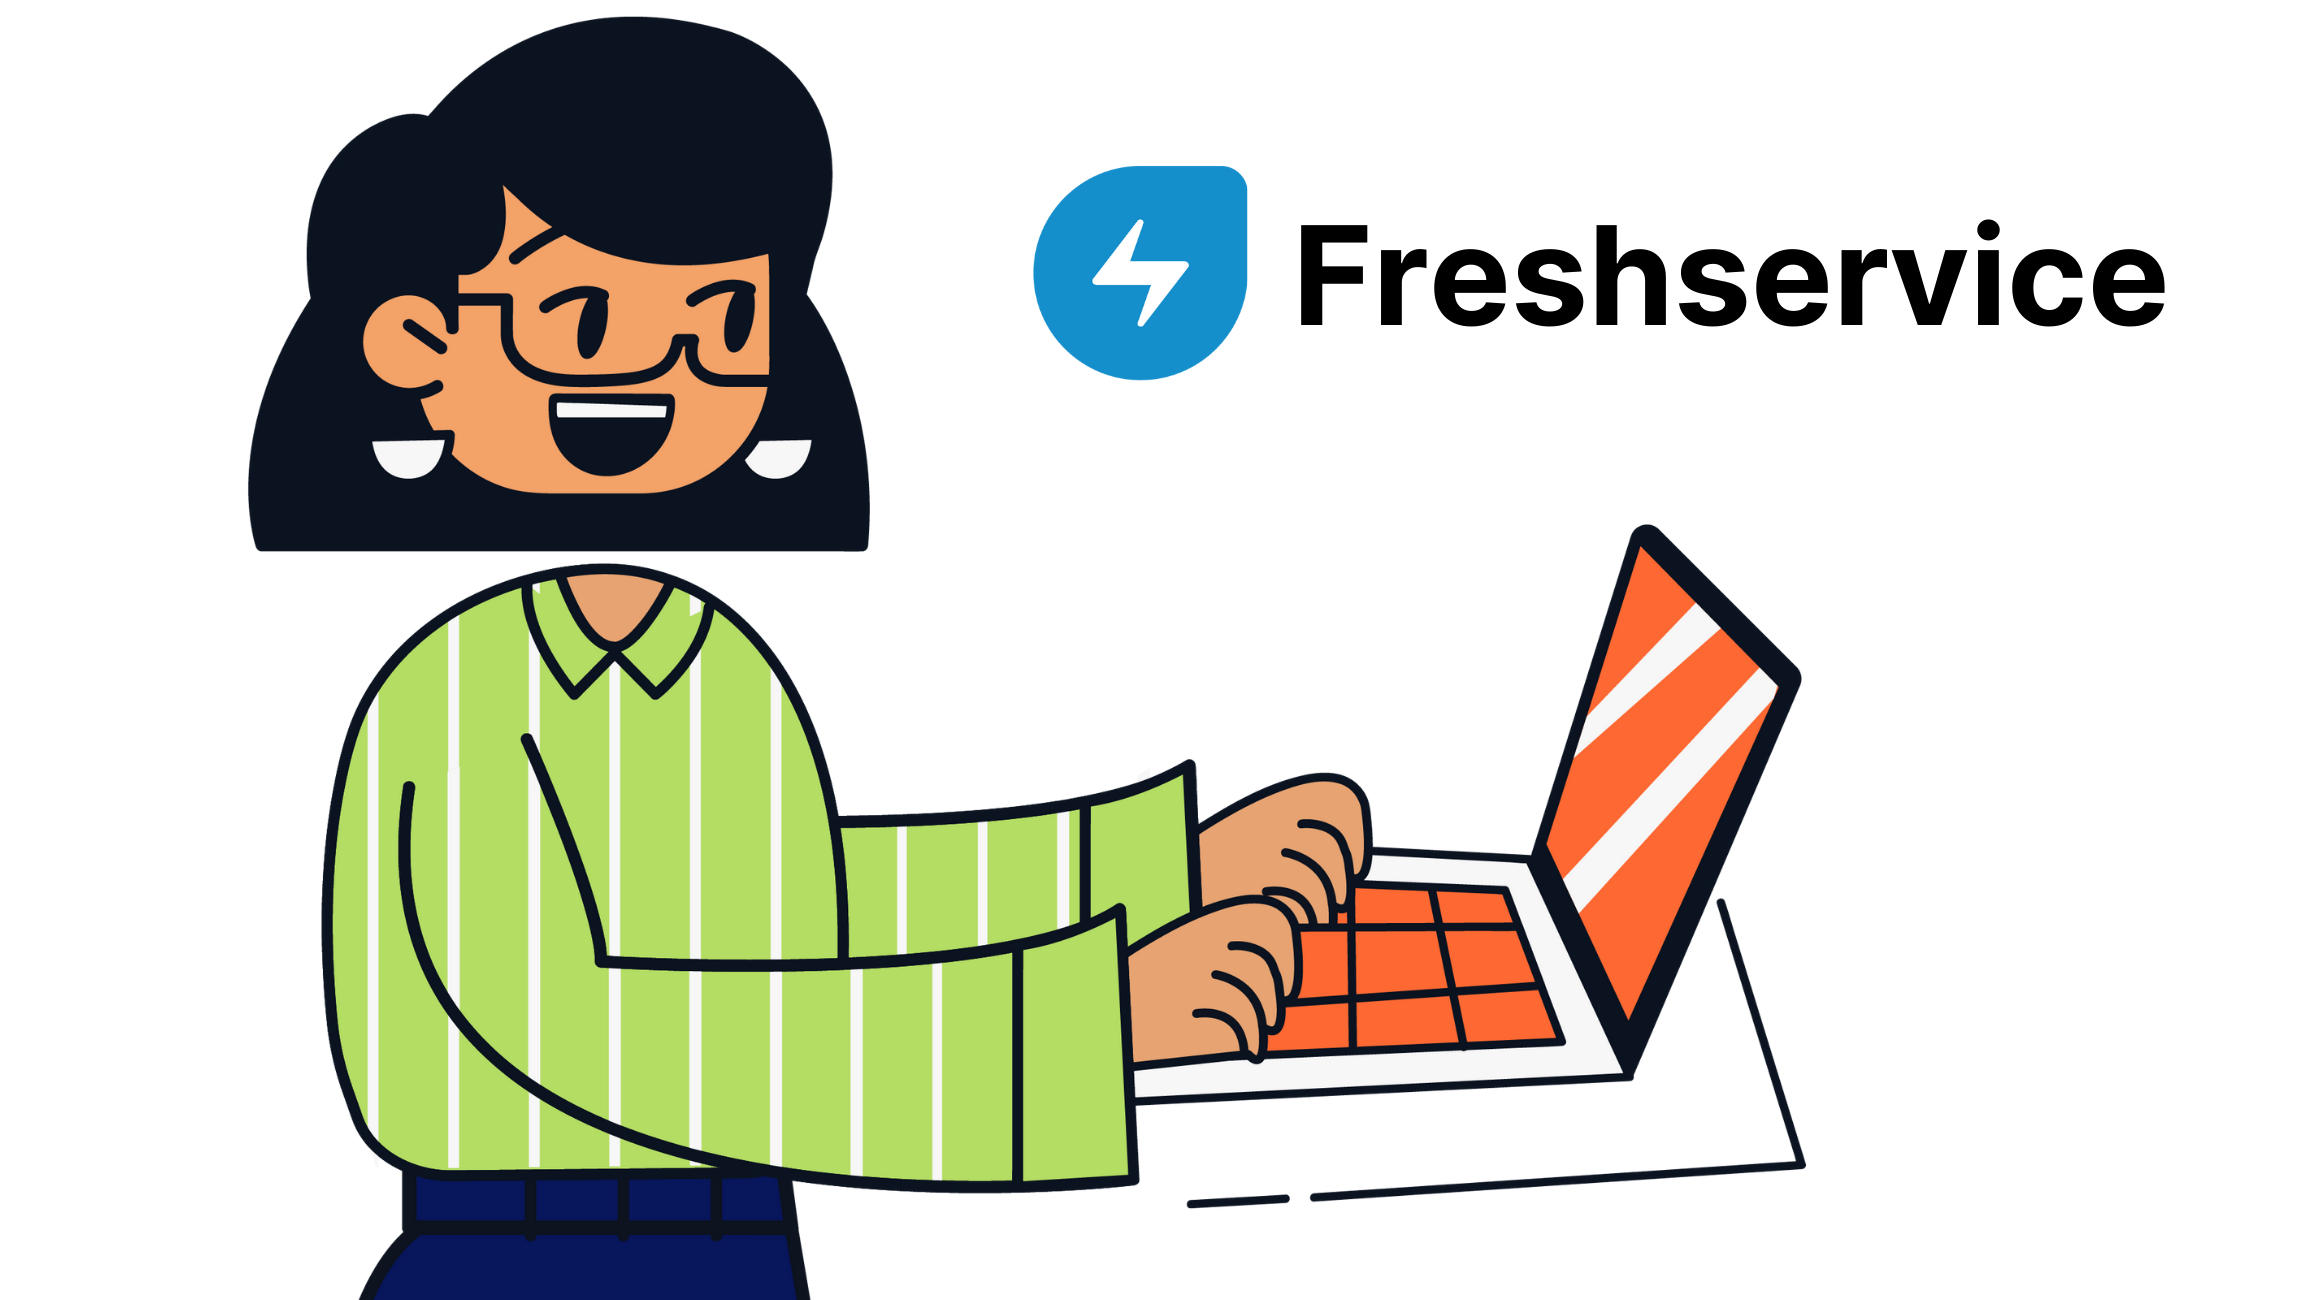 Freshservice is an intelligent IT service management solution